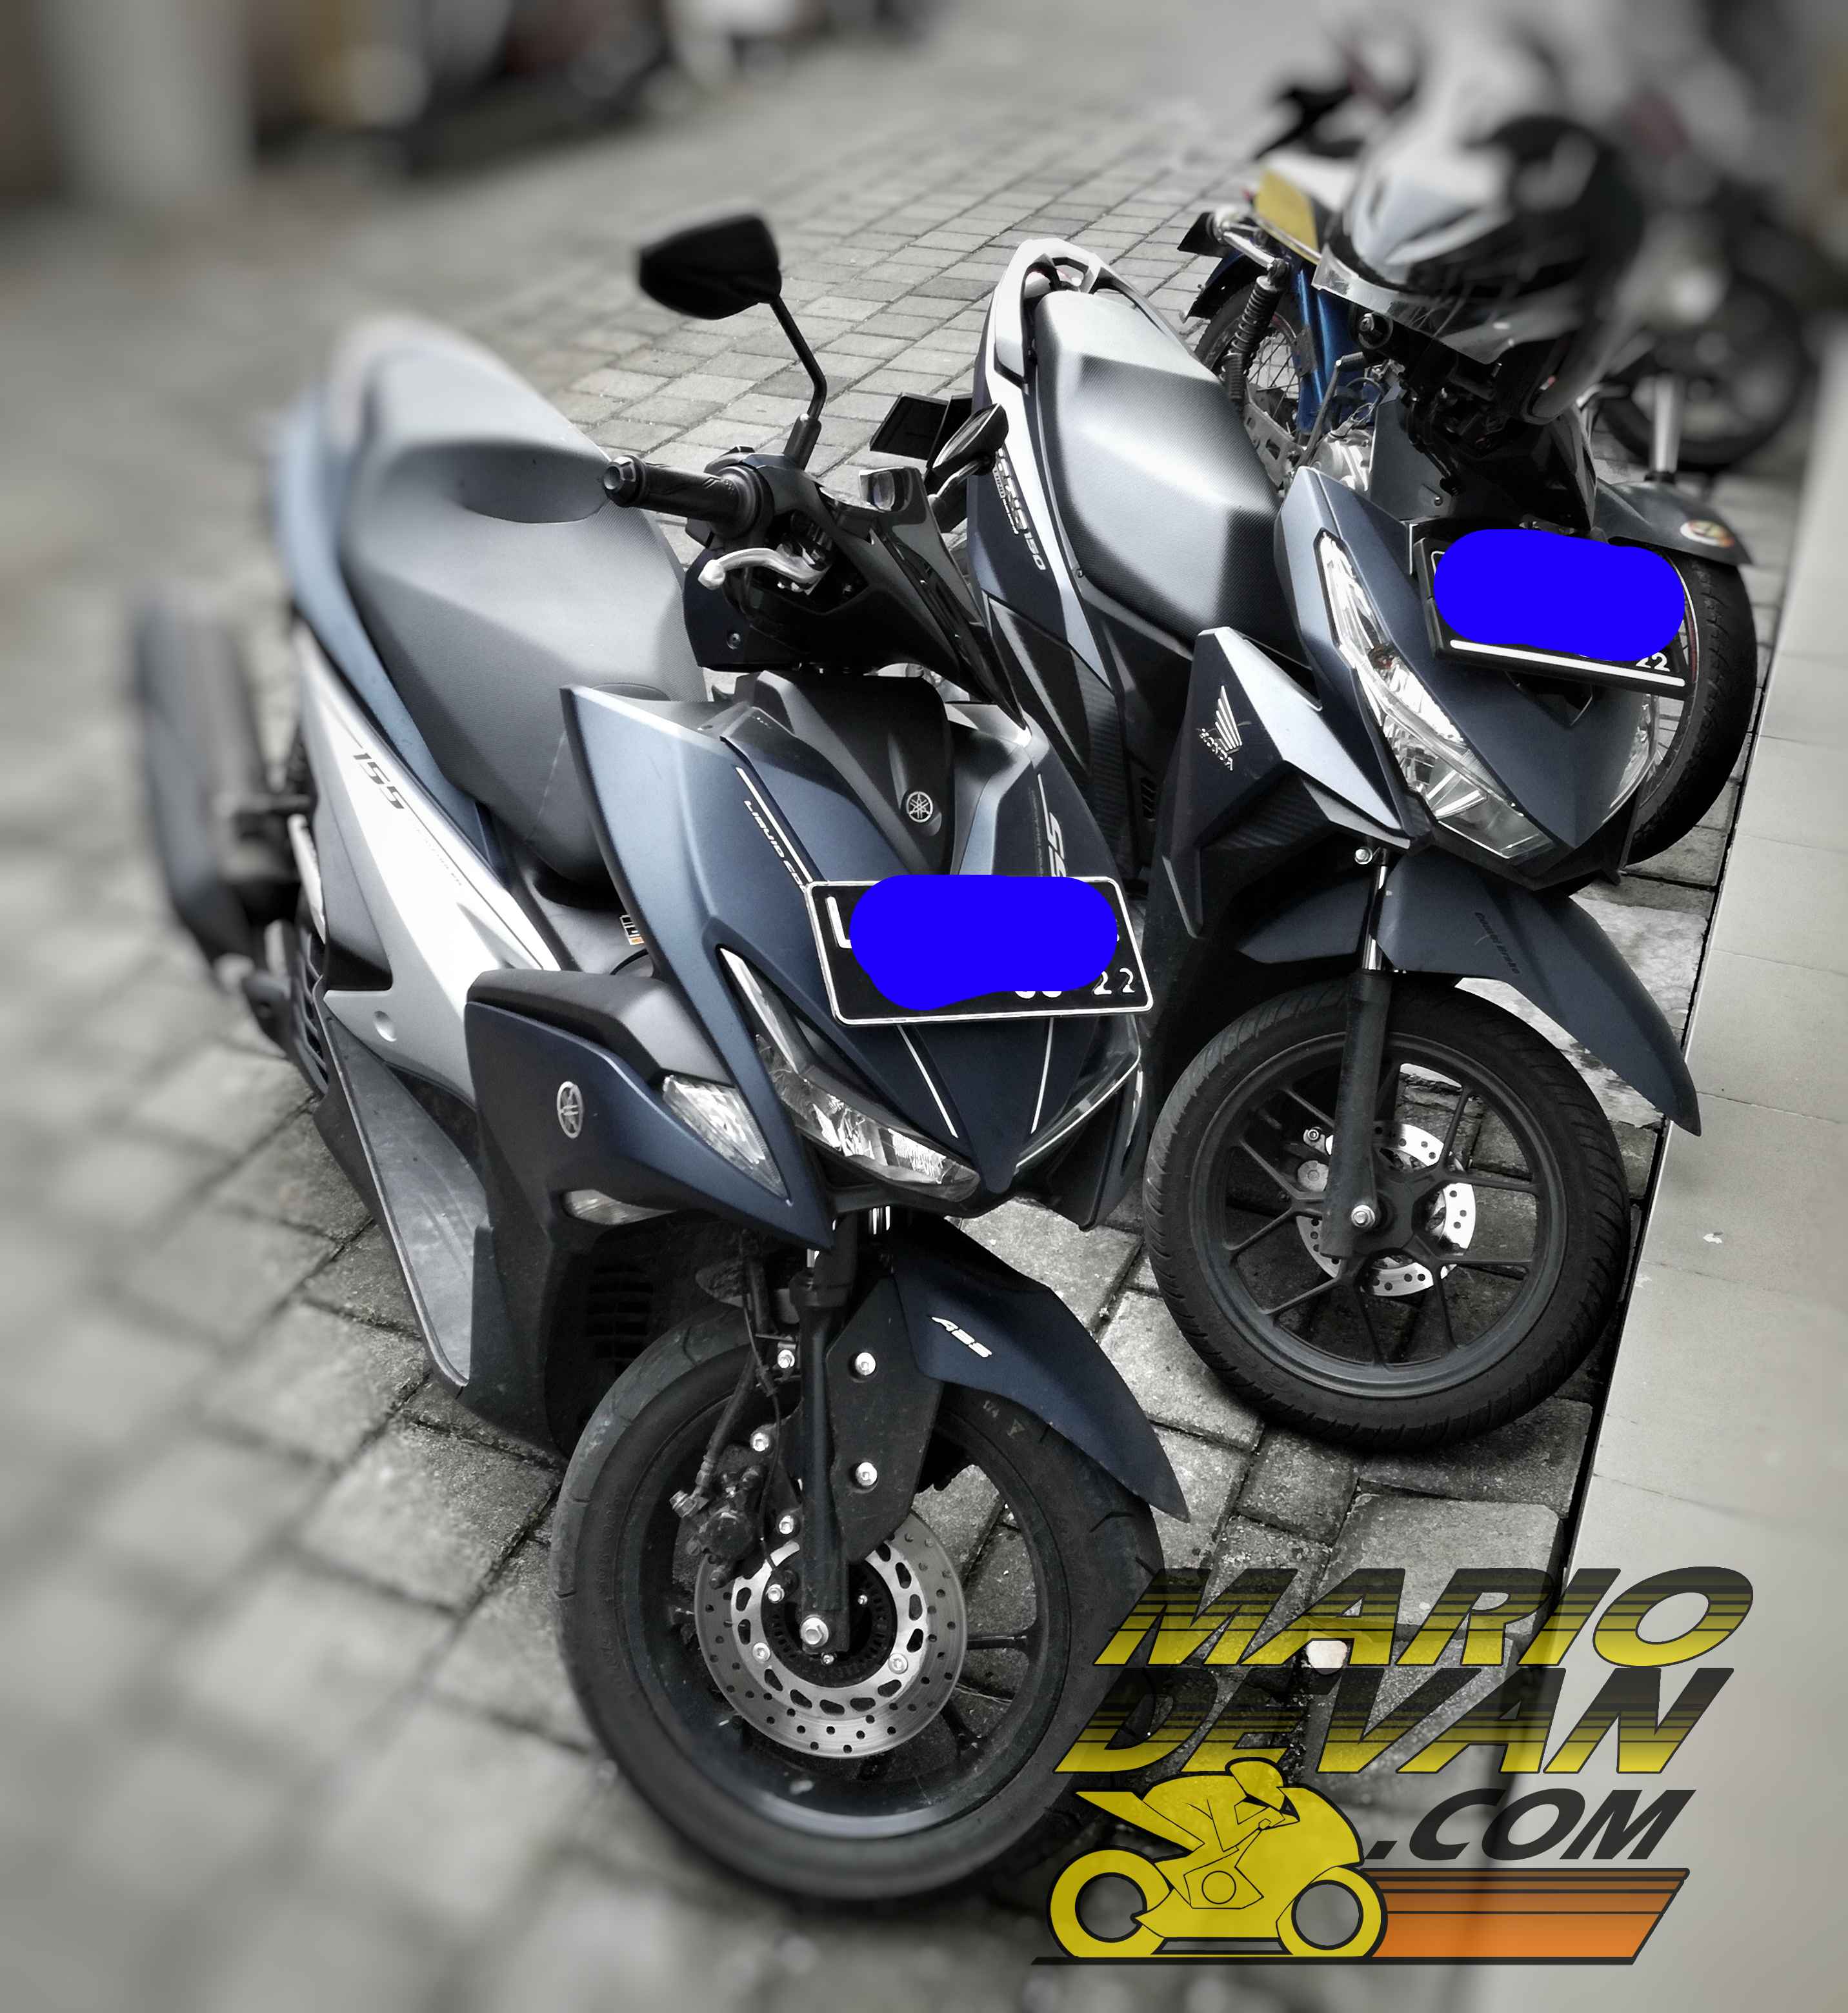 Yamaha Aerox 155 Vs Honda Vario 150 Pilih Mana Mario Devan Blogs